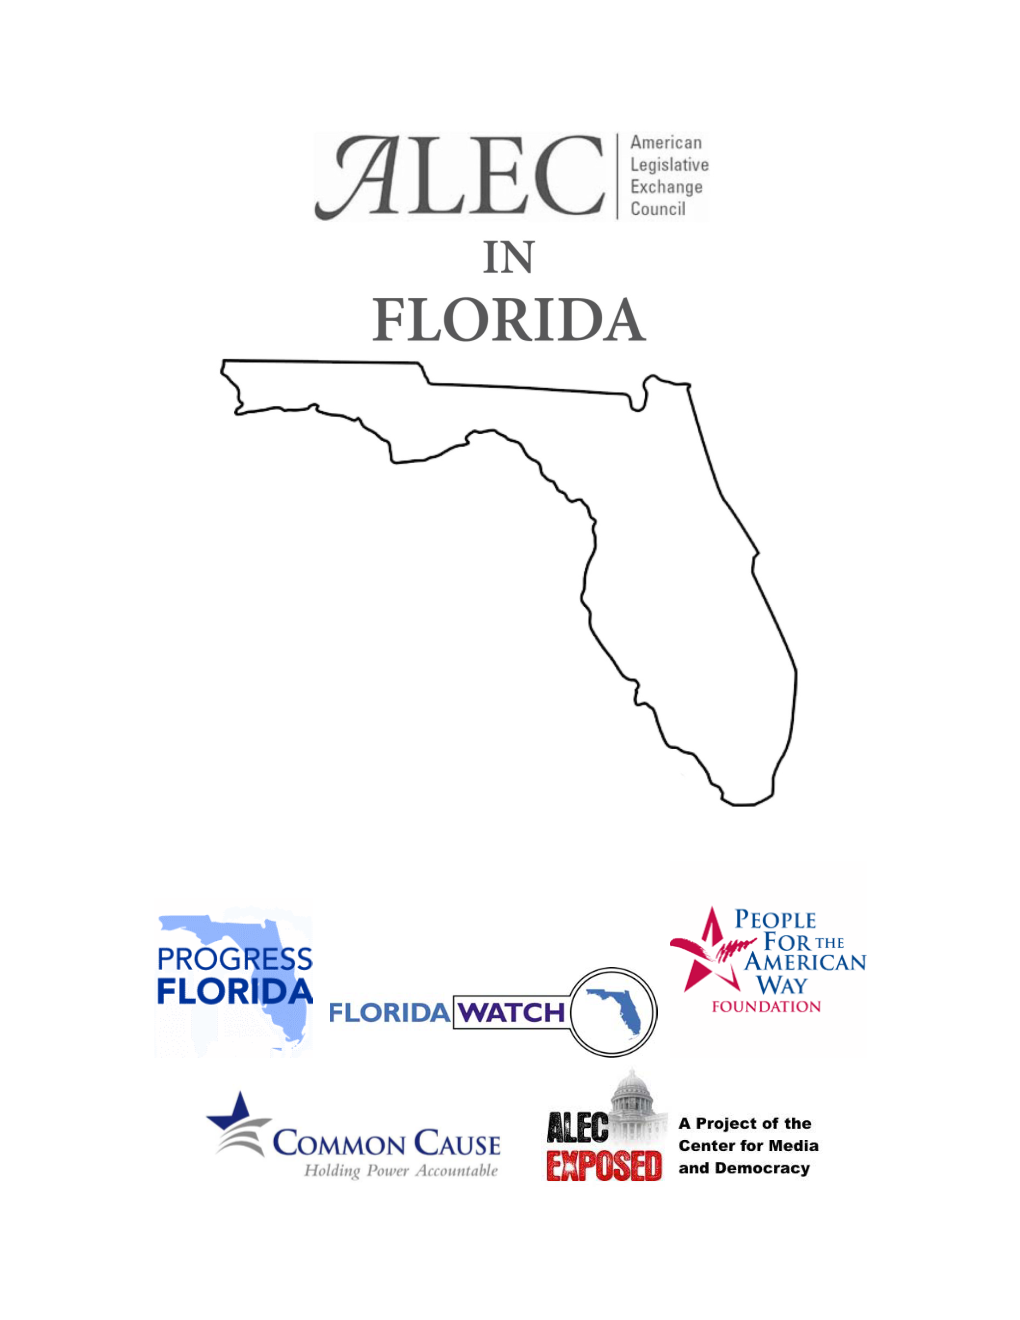 ALEC in Florida (2012)